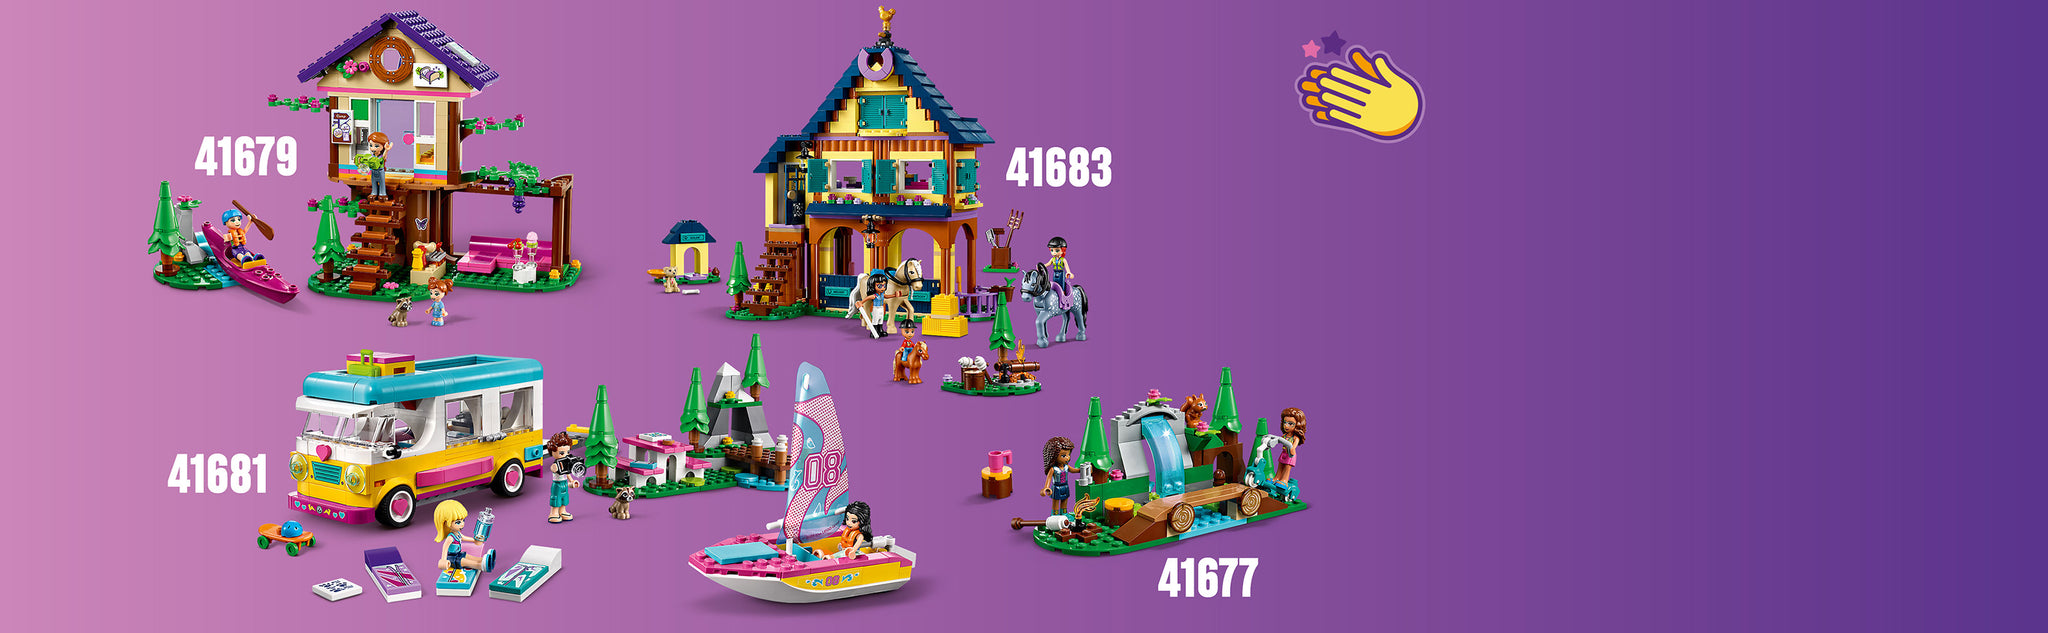 LEGO 41683 Reitbasis im Wald Reitschule